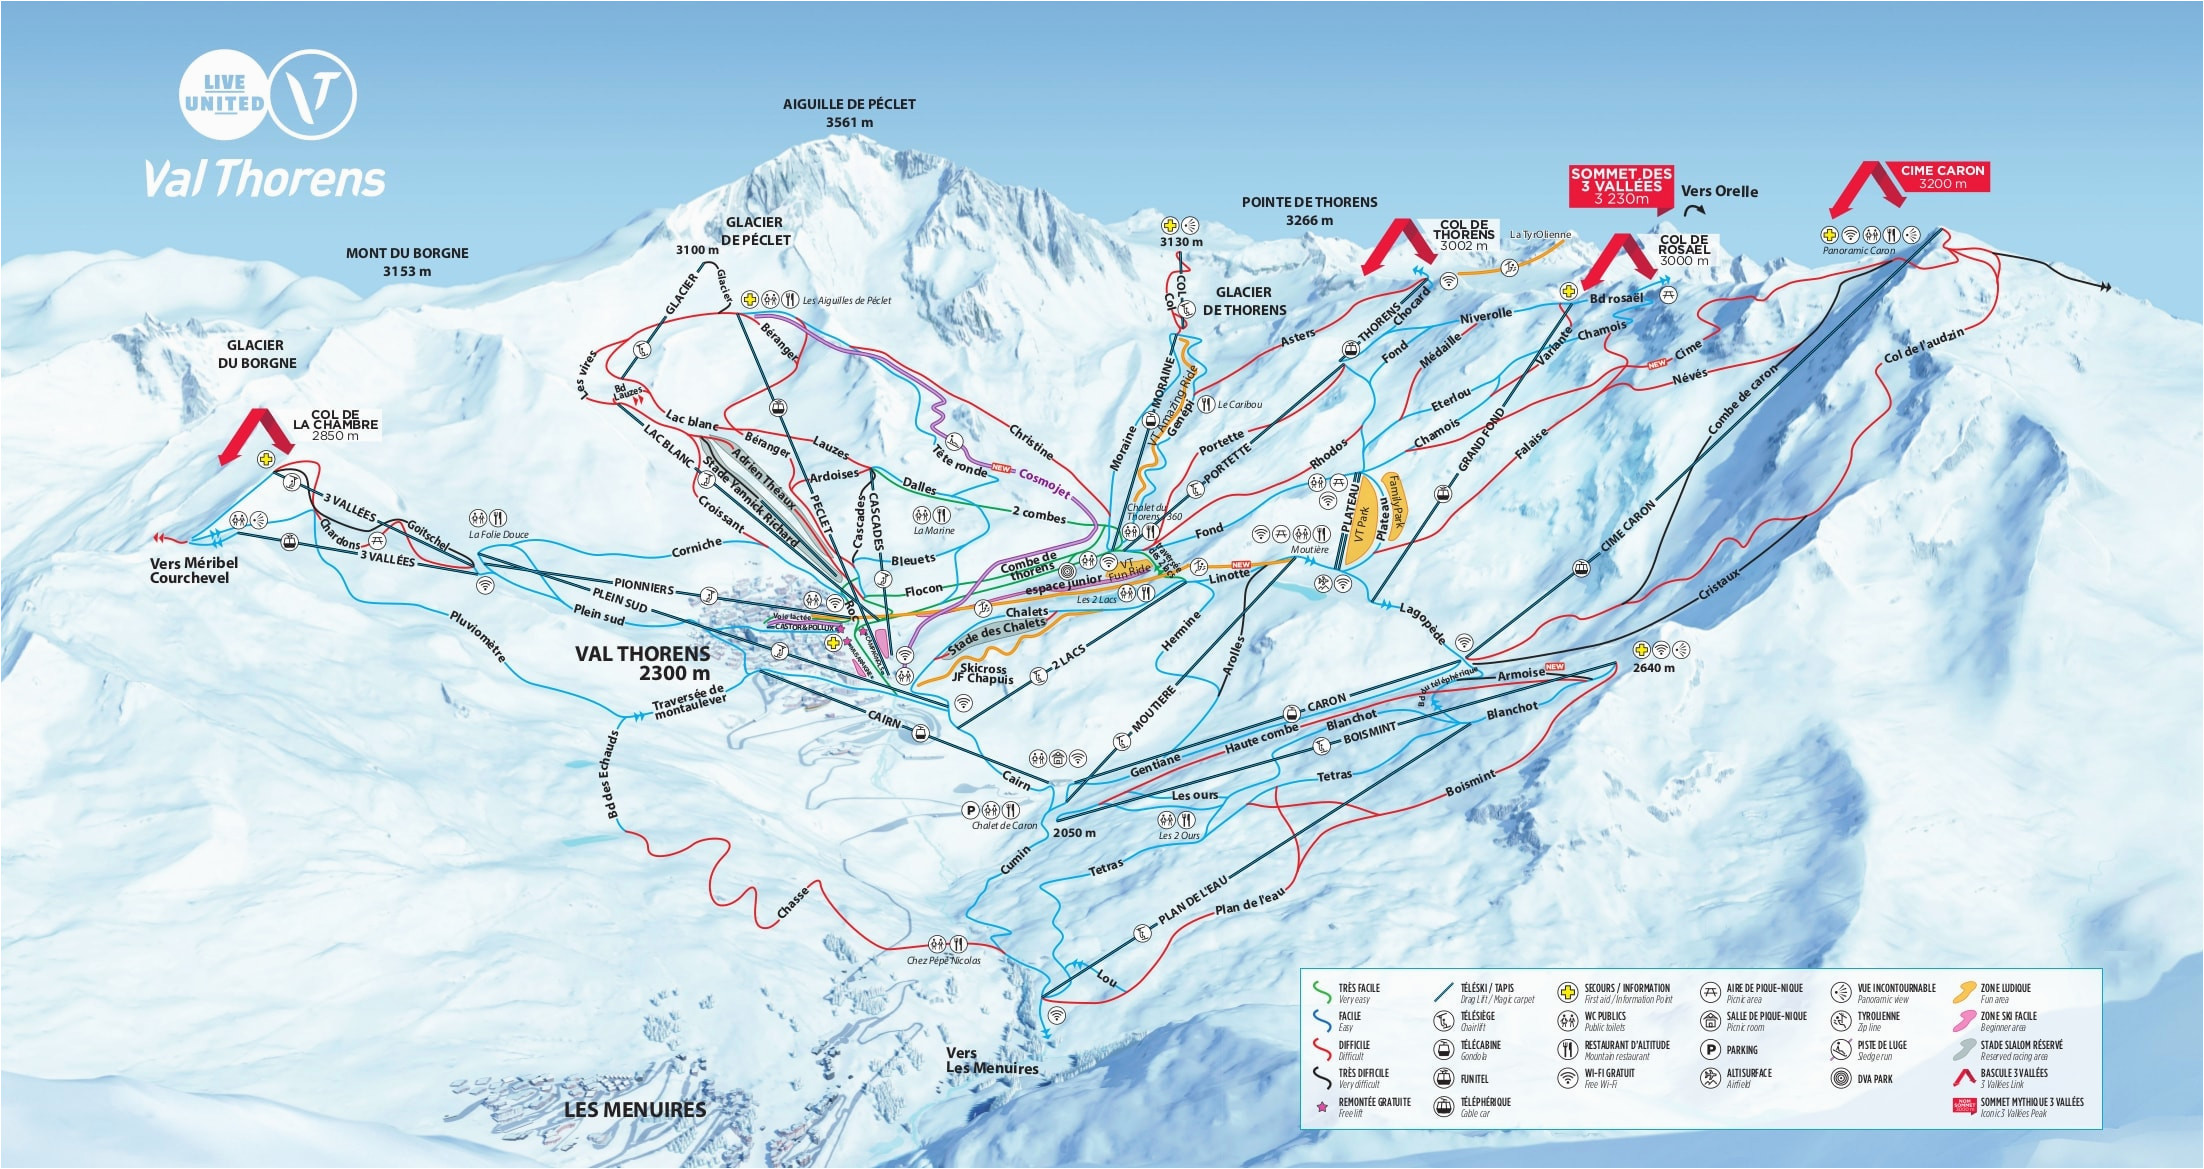 val thorens piste map 2019 ski europe winter ski